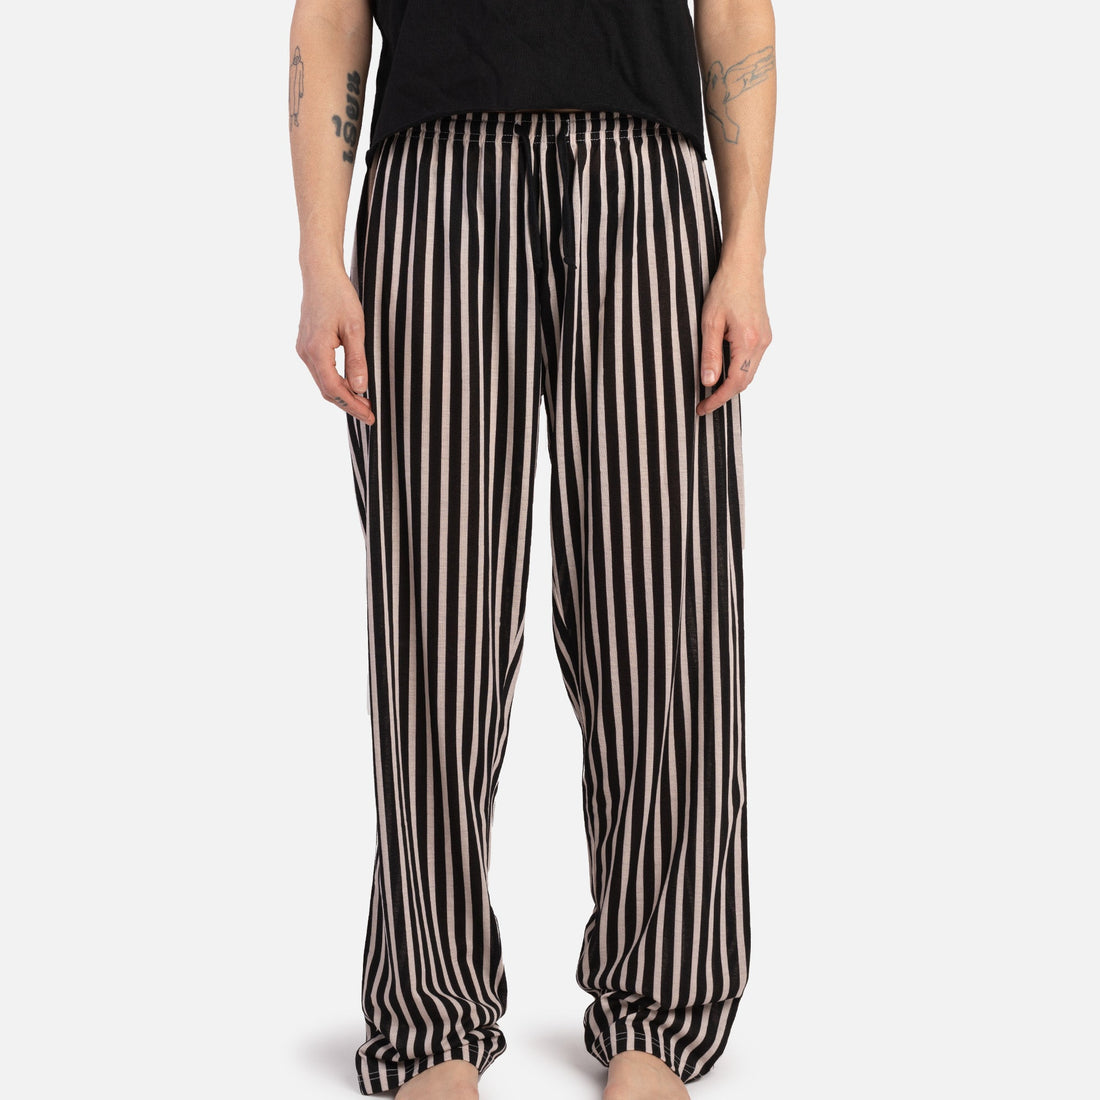 Matching Human Pajama - Stripe – Silver Paw